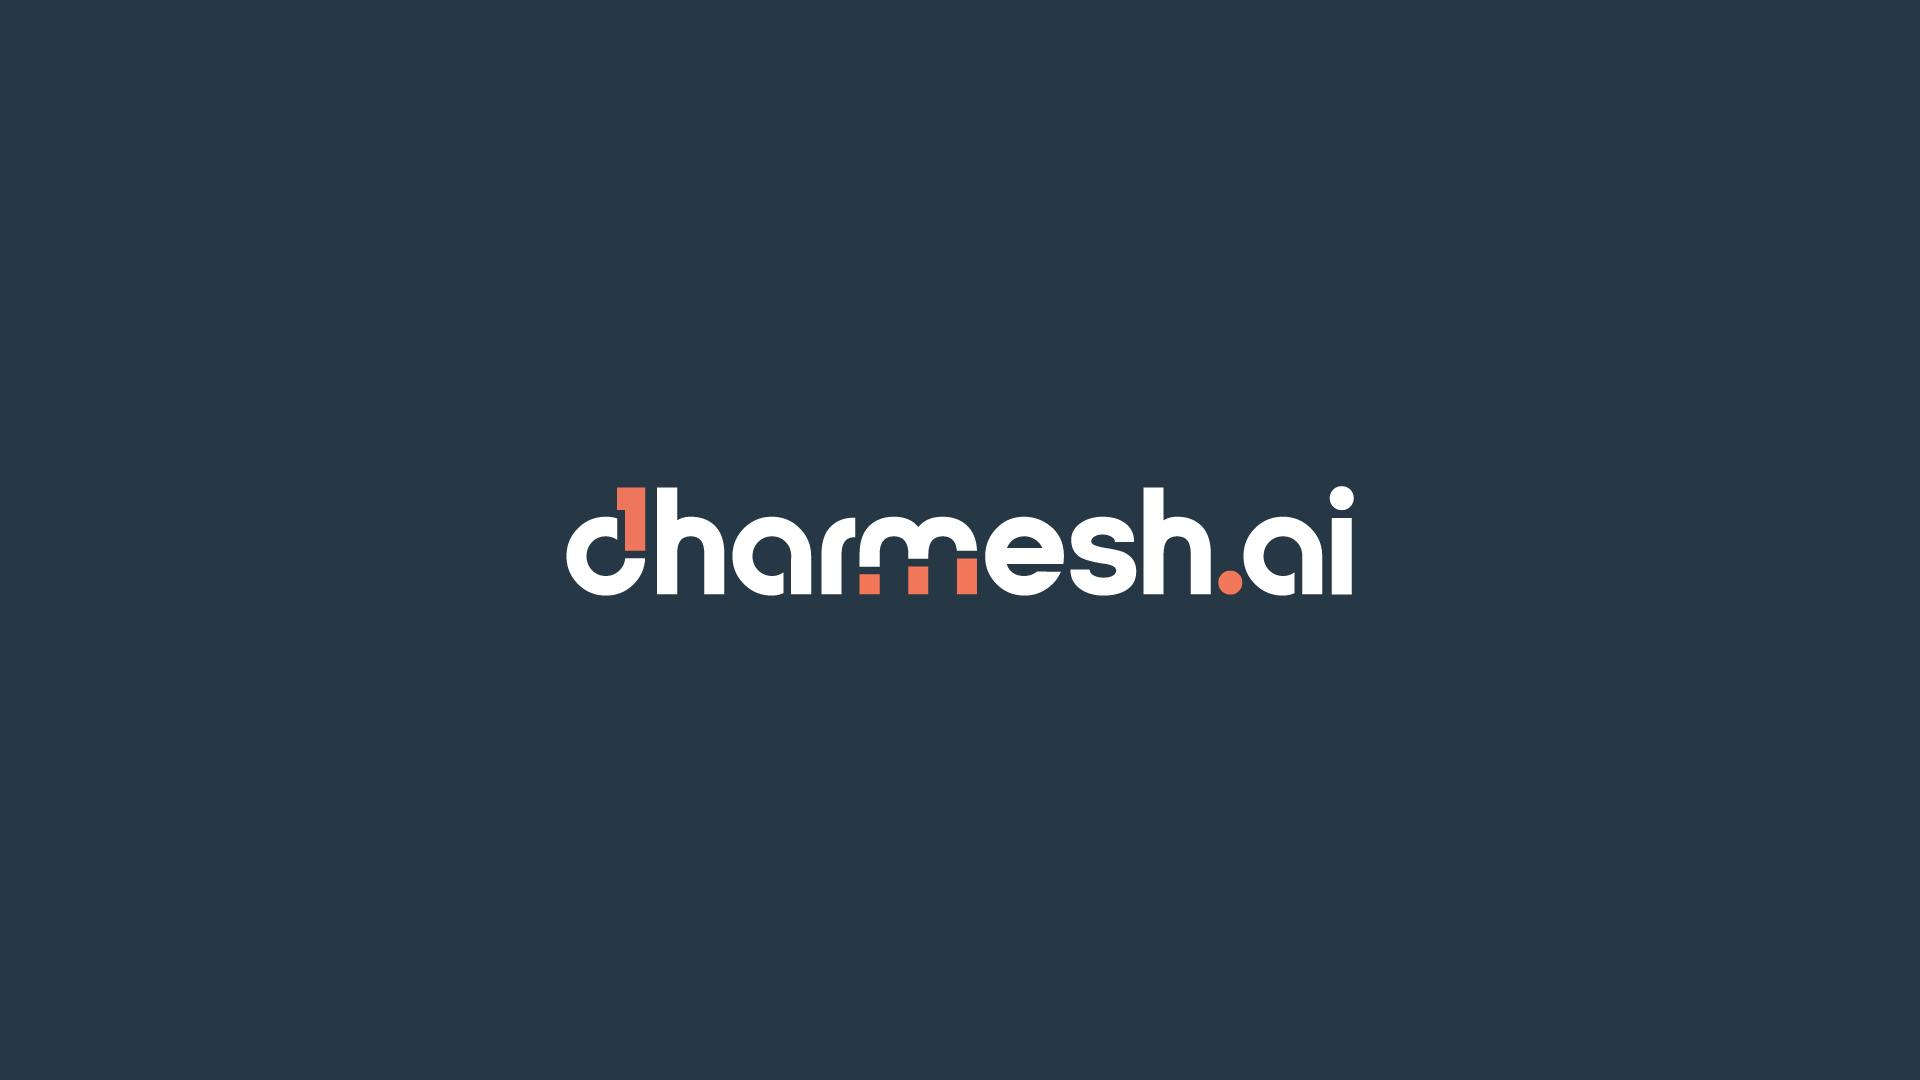 Dharmesh.ai logo on a dark blue background